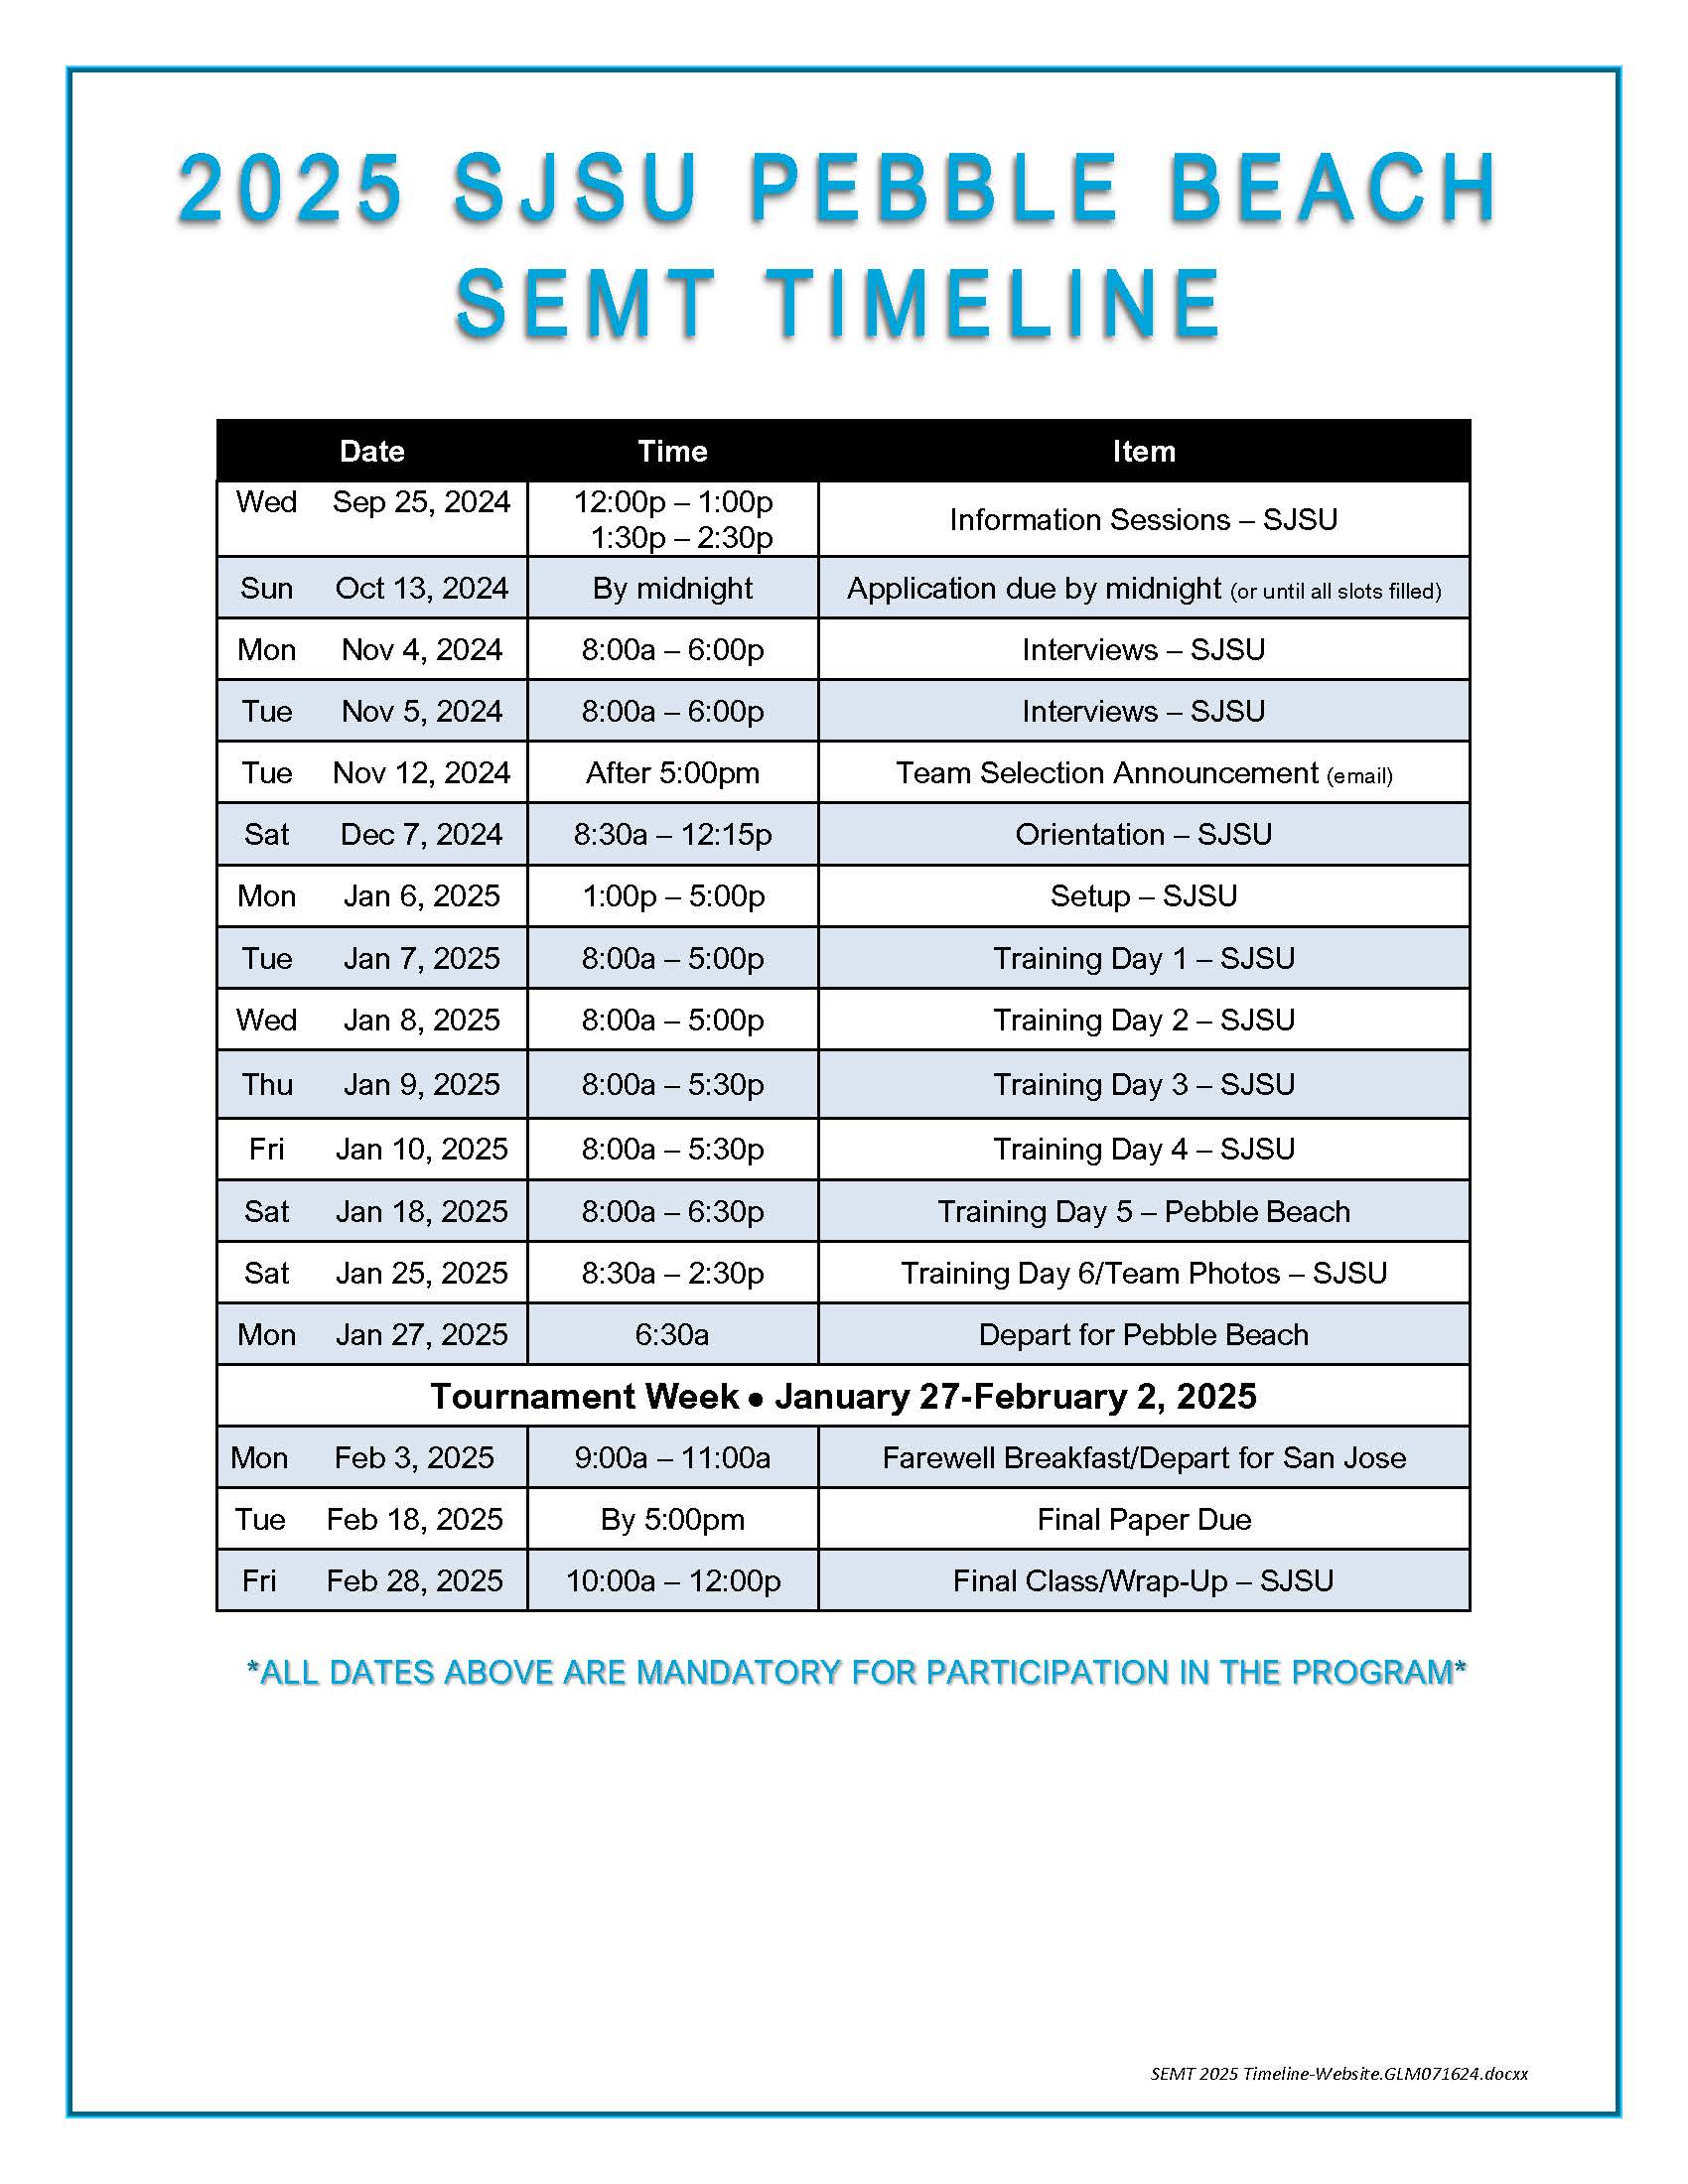 2025 SJSU Pebble Beach SEMT Timeline